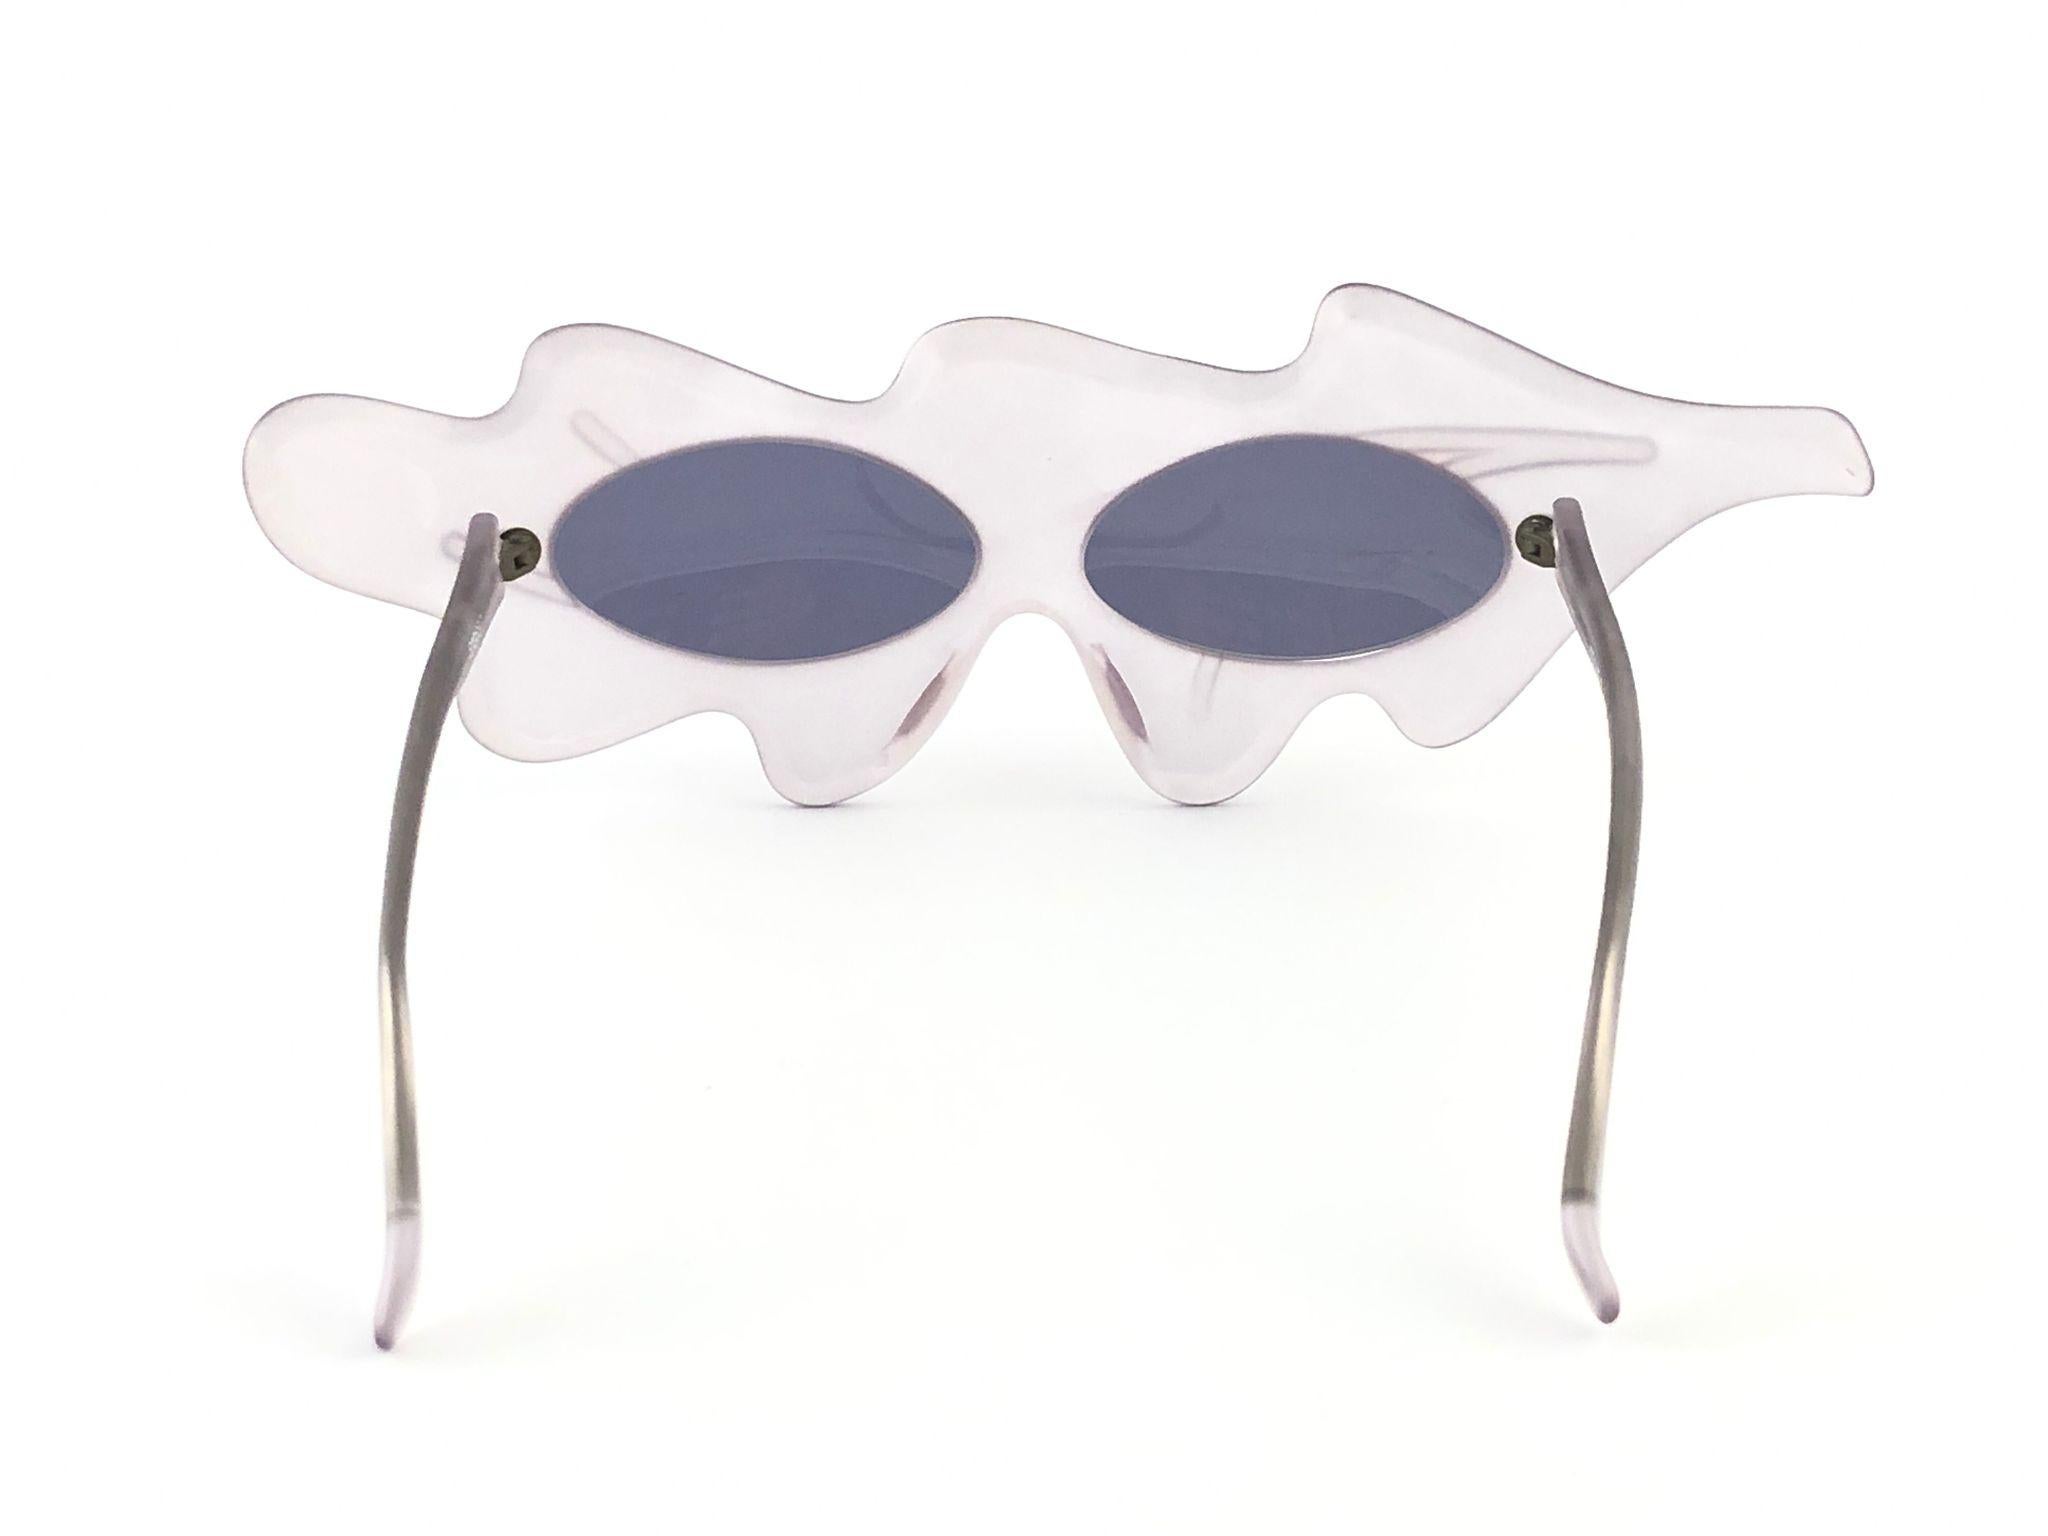 New Vintage Alain Mikli Light Grey Made in France Sunglasses 1980's For Sale 4